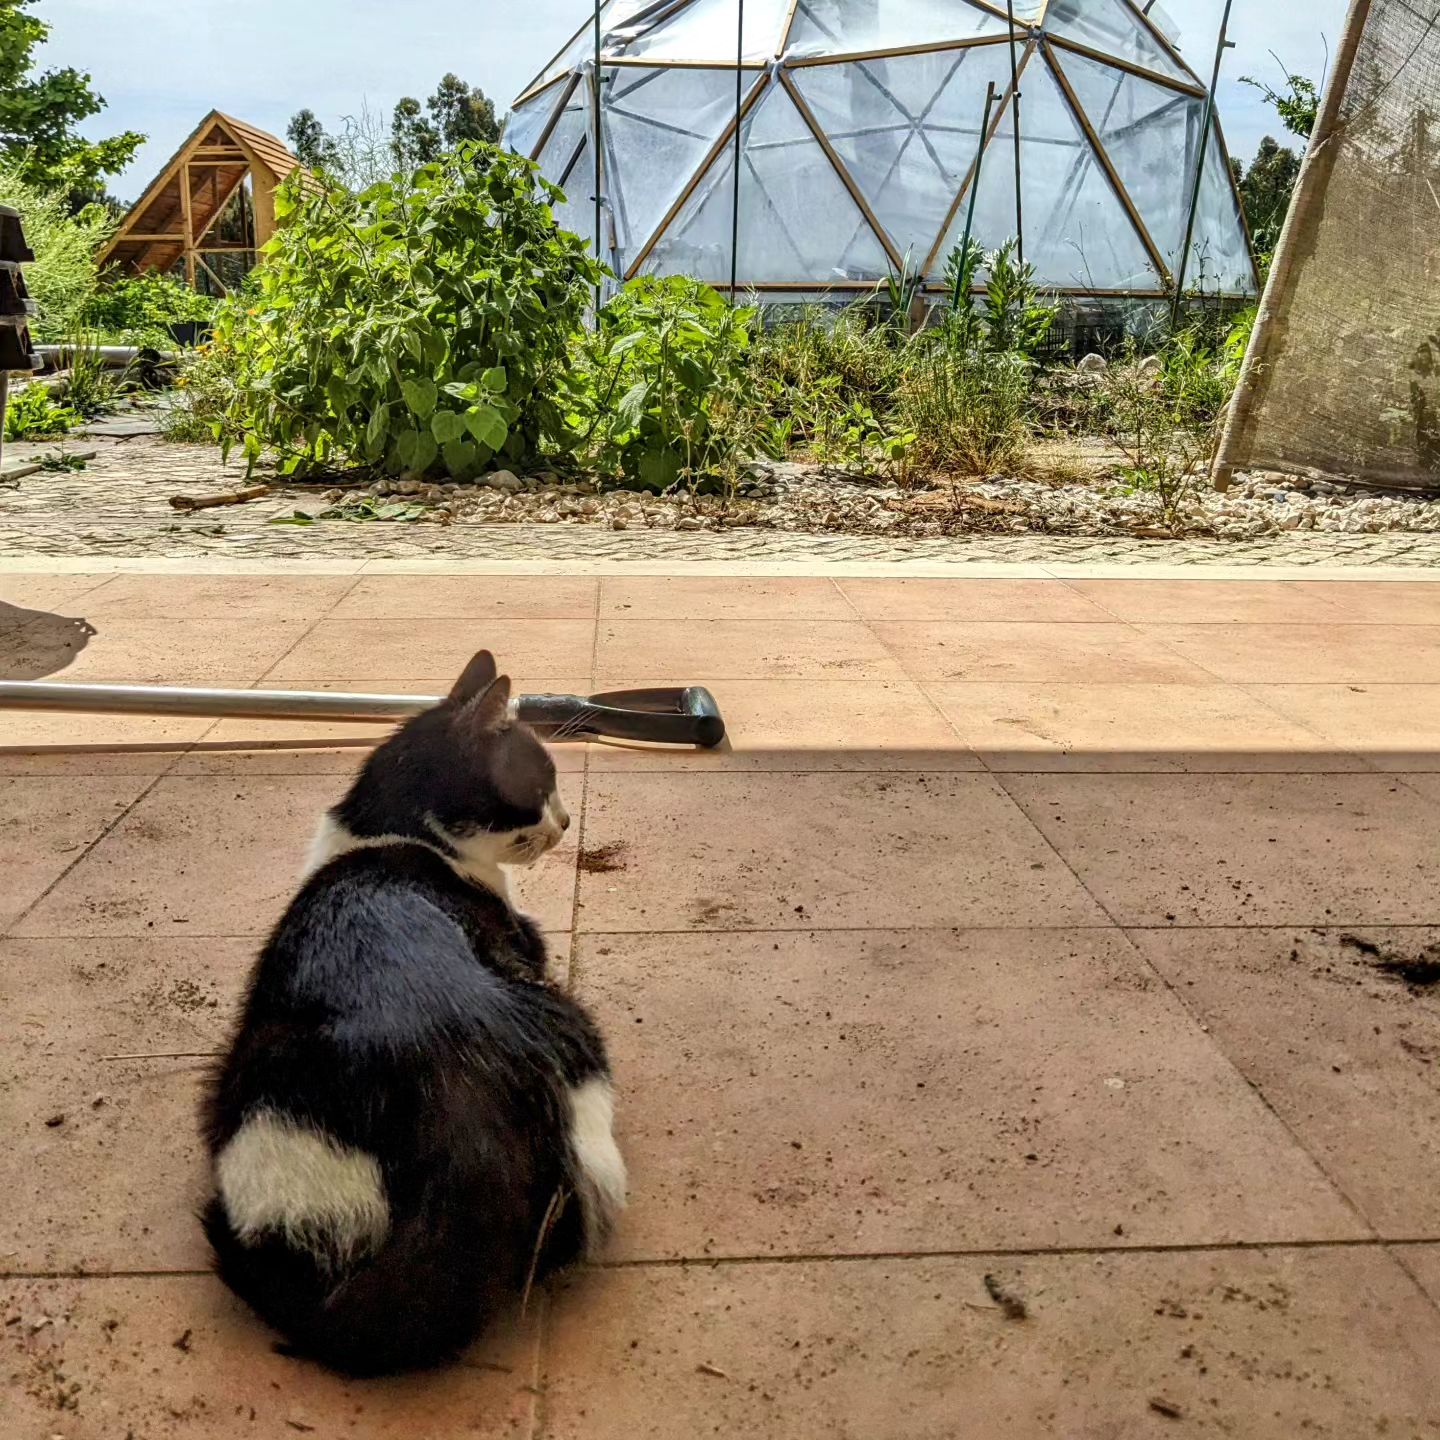 A cat visiting our garden